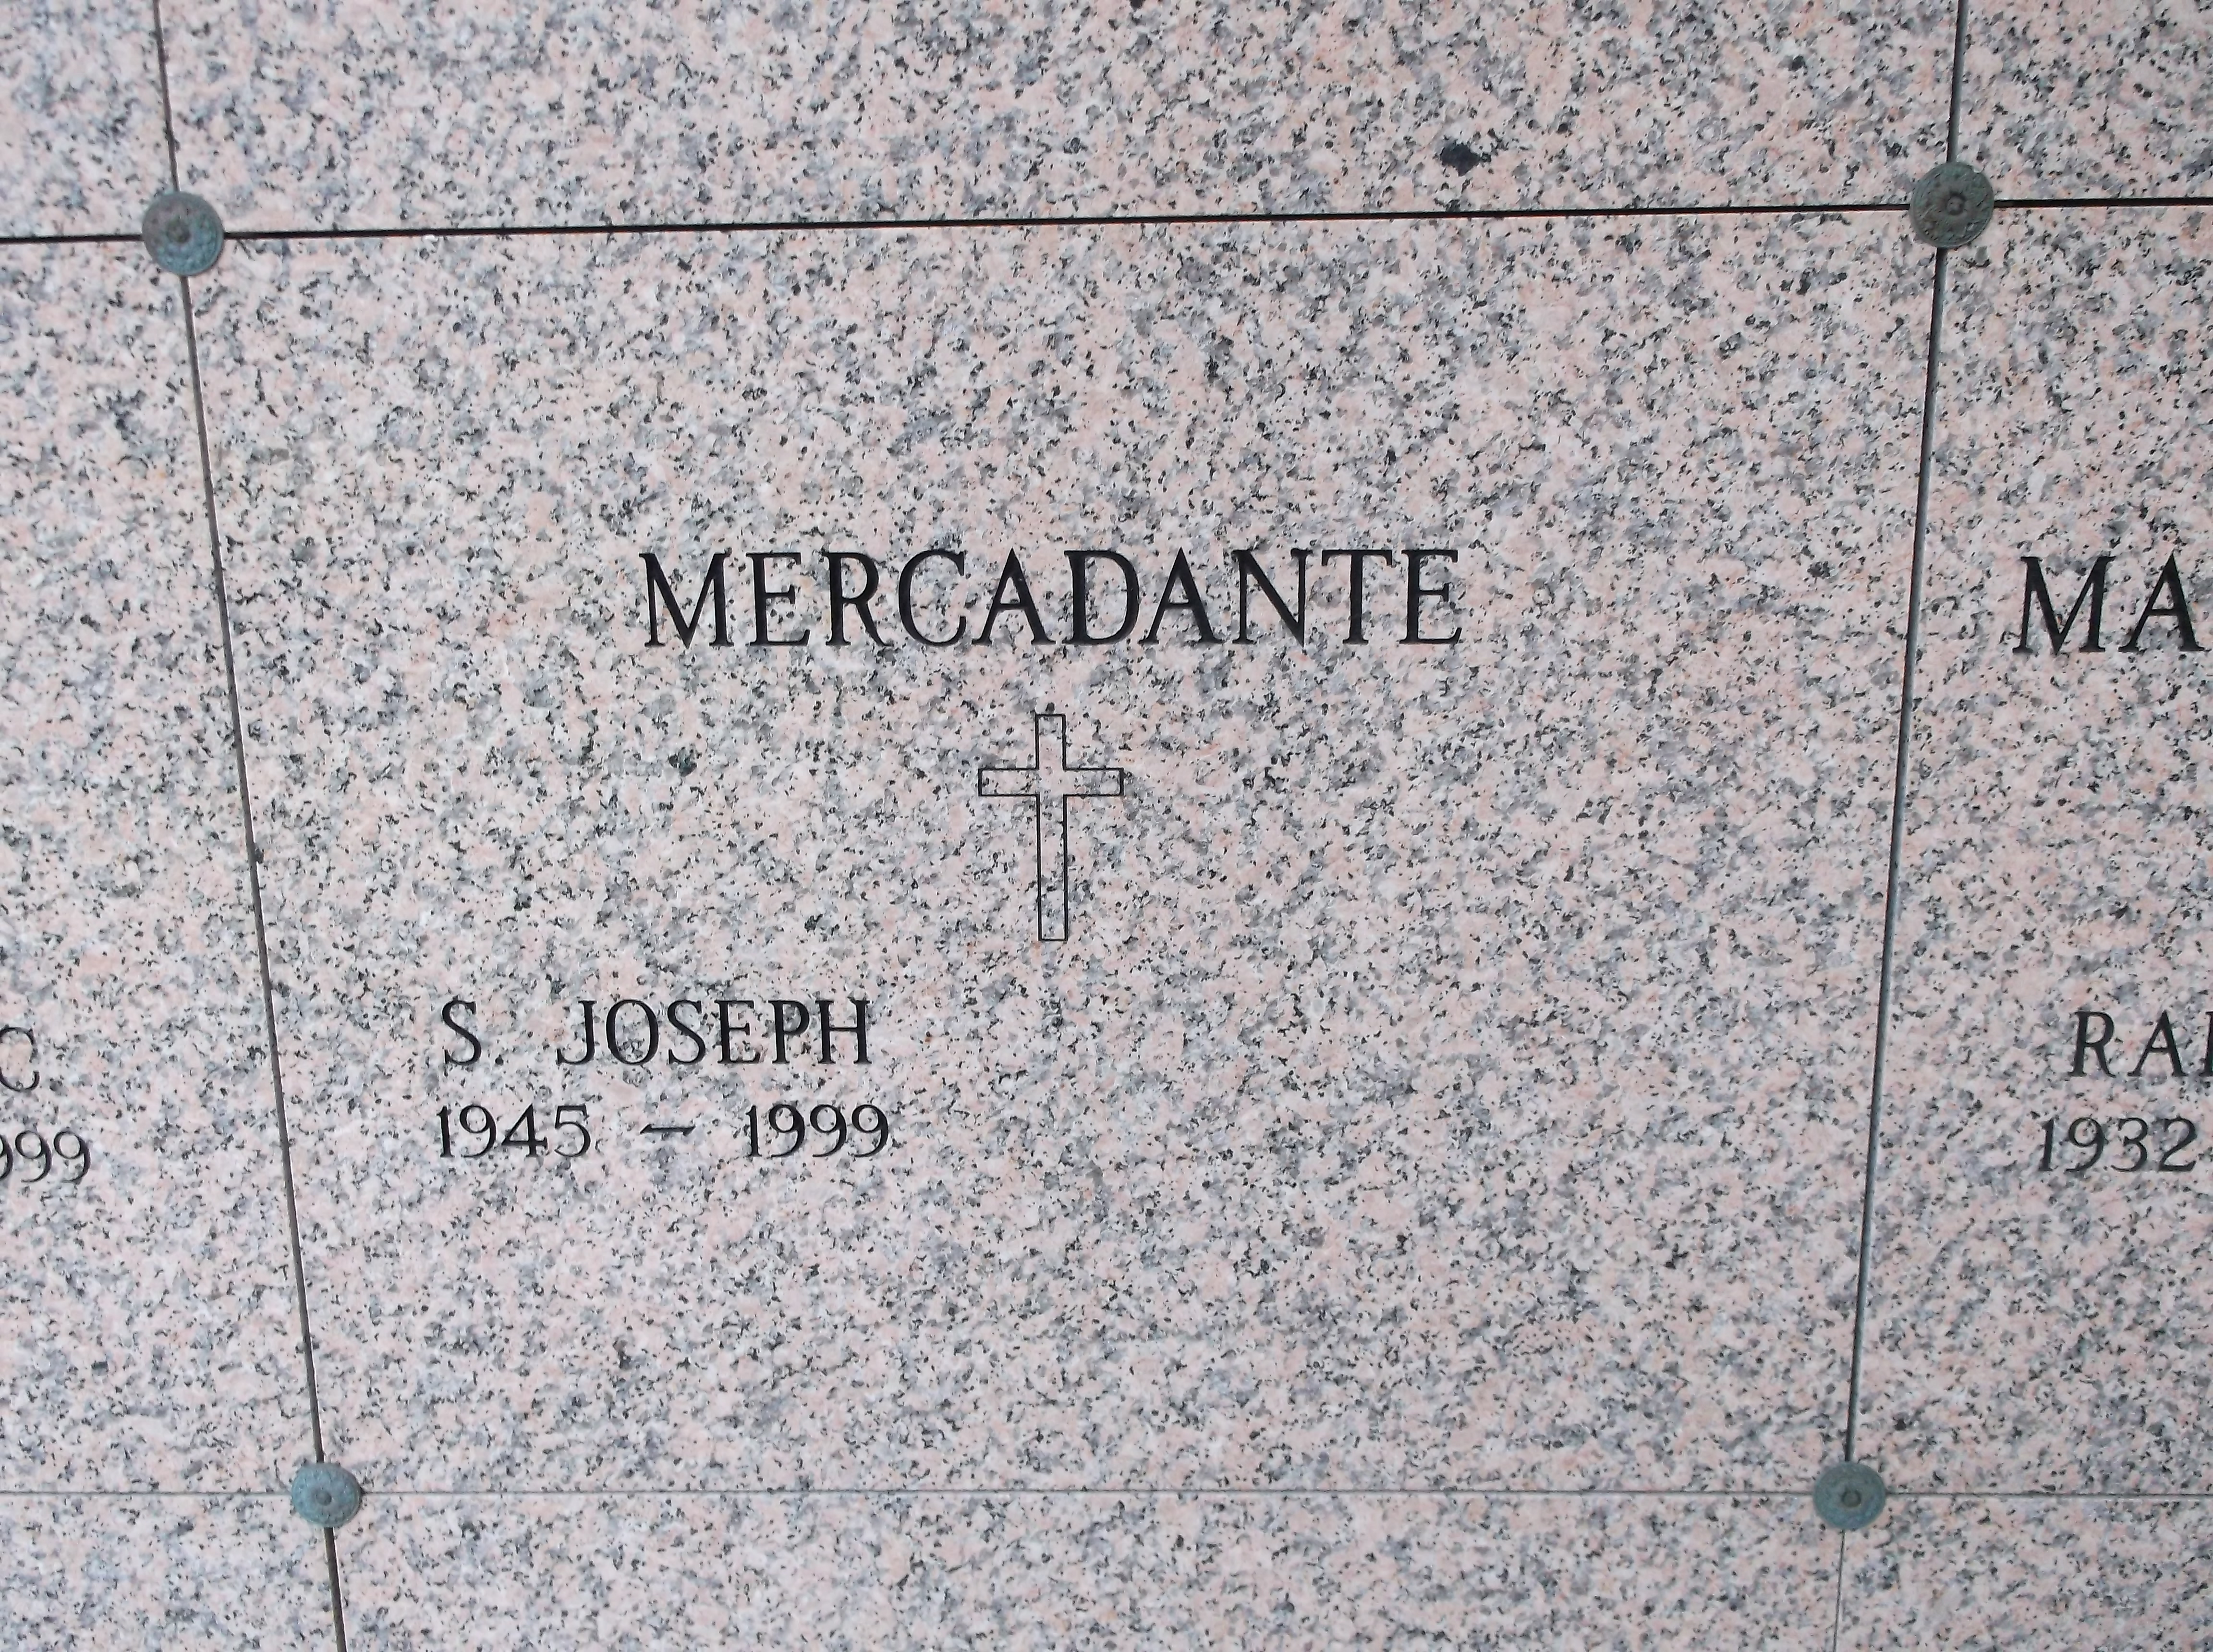 S Joseph Mercadante